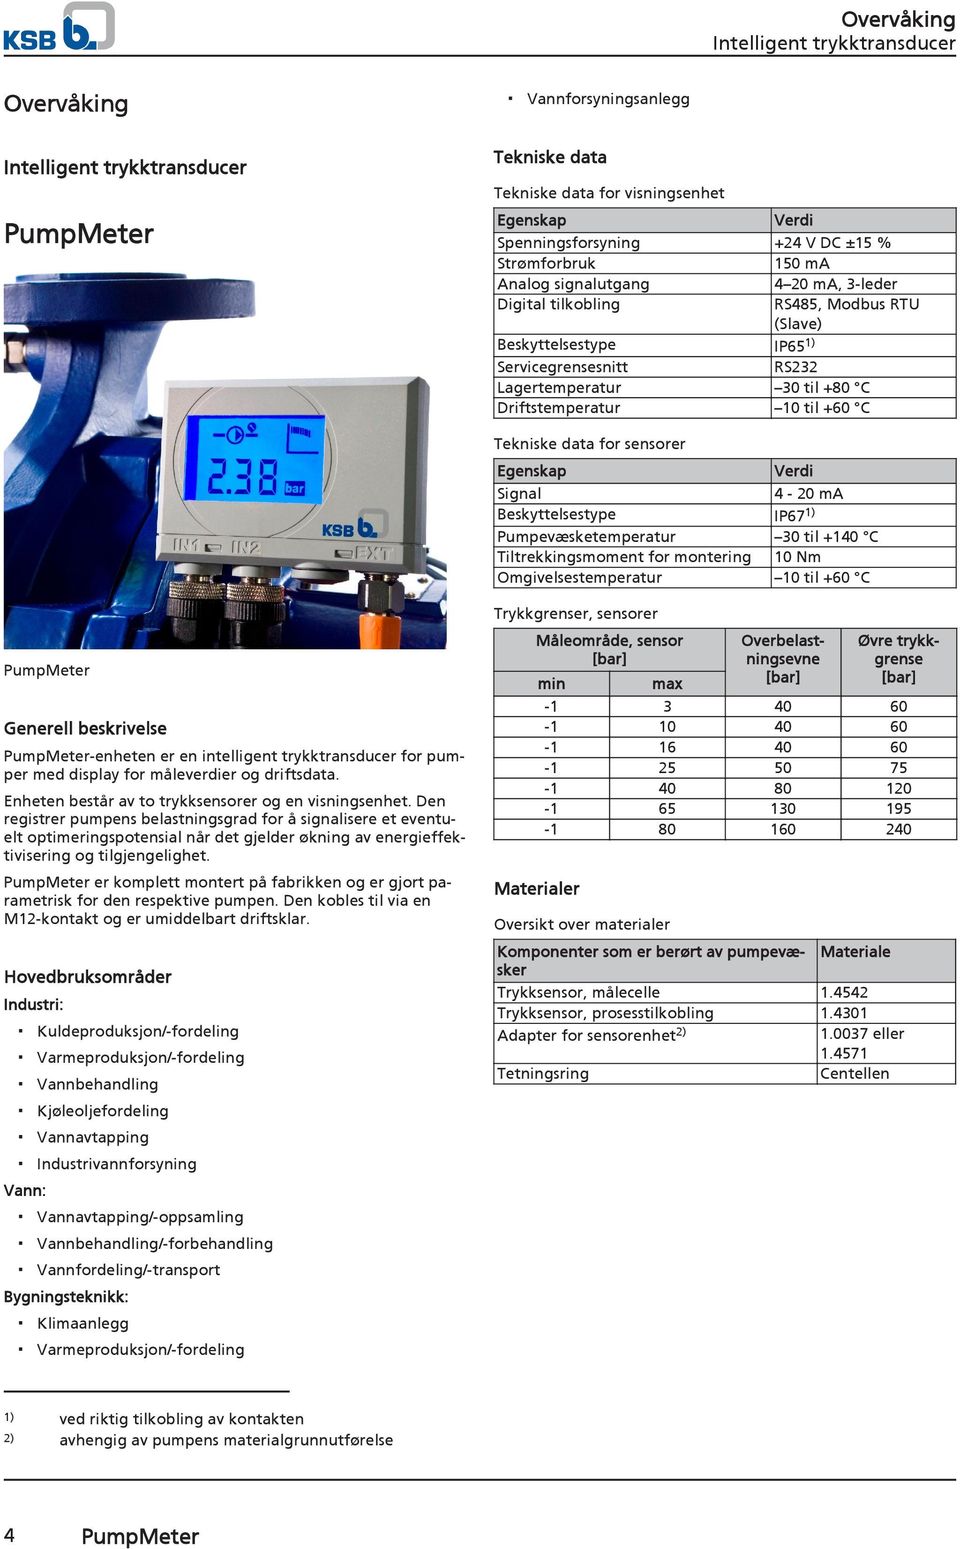 Signal Beskyttelsestype Pumpevæsketemperatur Tiltrekkingsmoment for montering Omgivelsestemperatur Verdi 4-20 ma IP671) 30 til +140 C 10 Nm 10 til +60 C Trykkgrenser, sensorer PumpMeter Generell